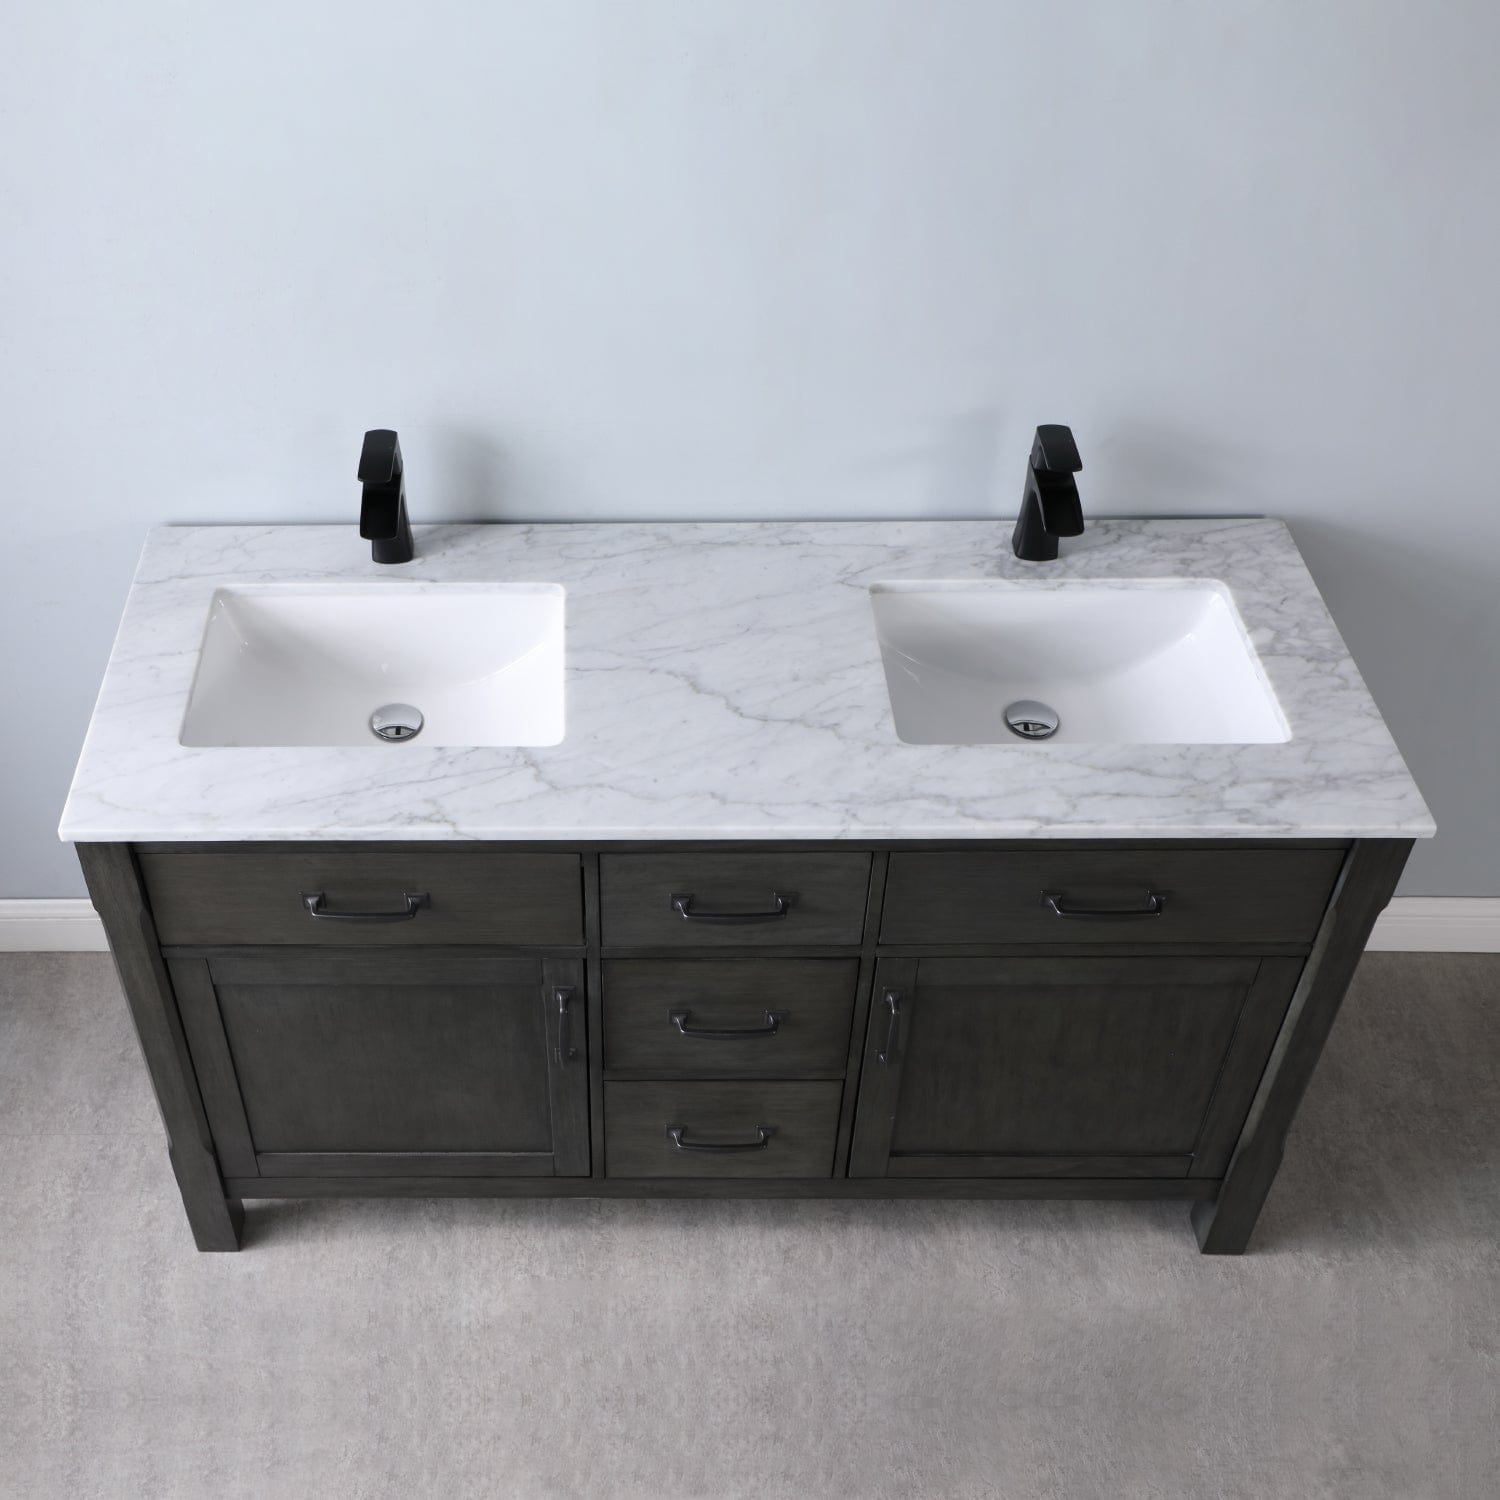 Altair Maribella 60" Double Bathroom Vanity Set in Rust Black and Carrara White Marble Countertop without Mirror 535060-RL-CA-NM - Molaix631112970365Vanity535060-RL-CA-NM